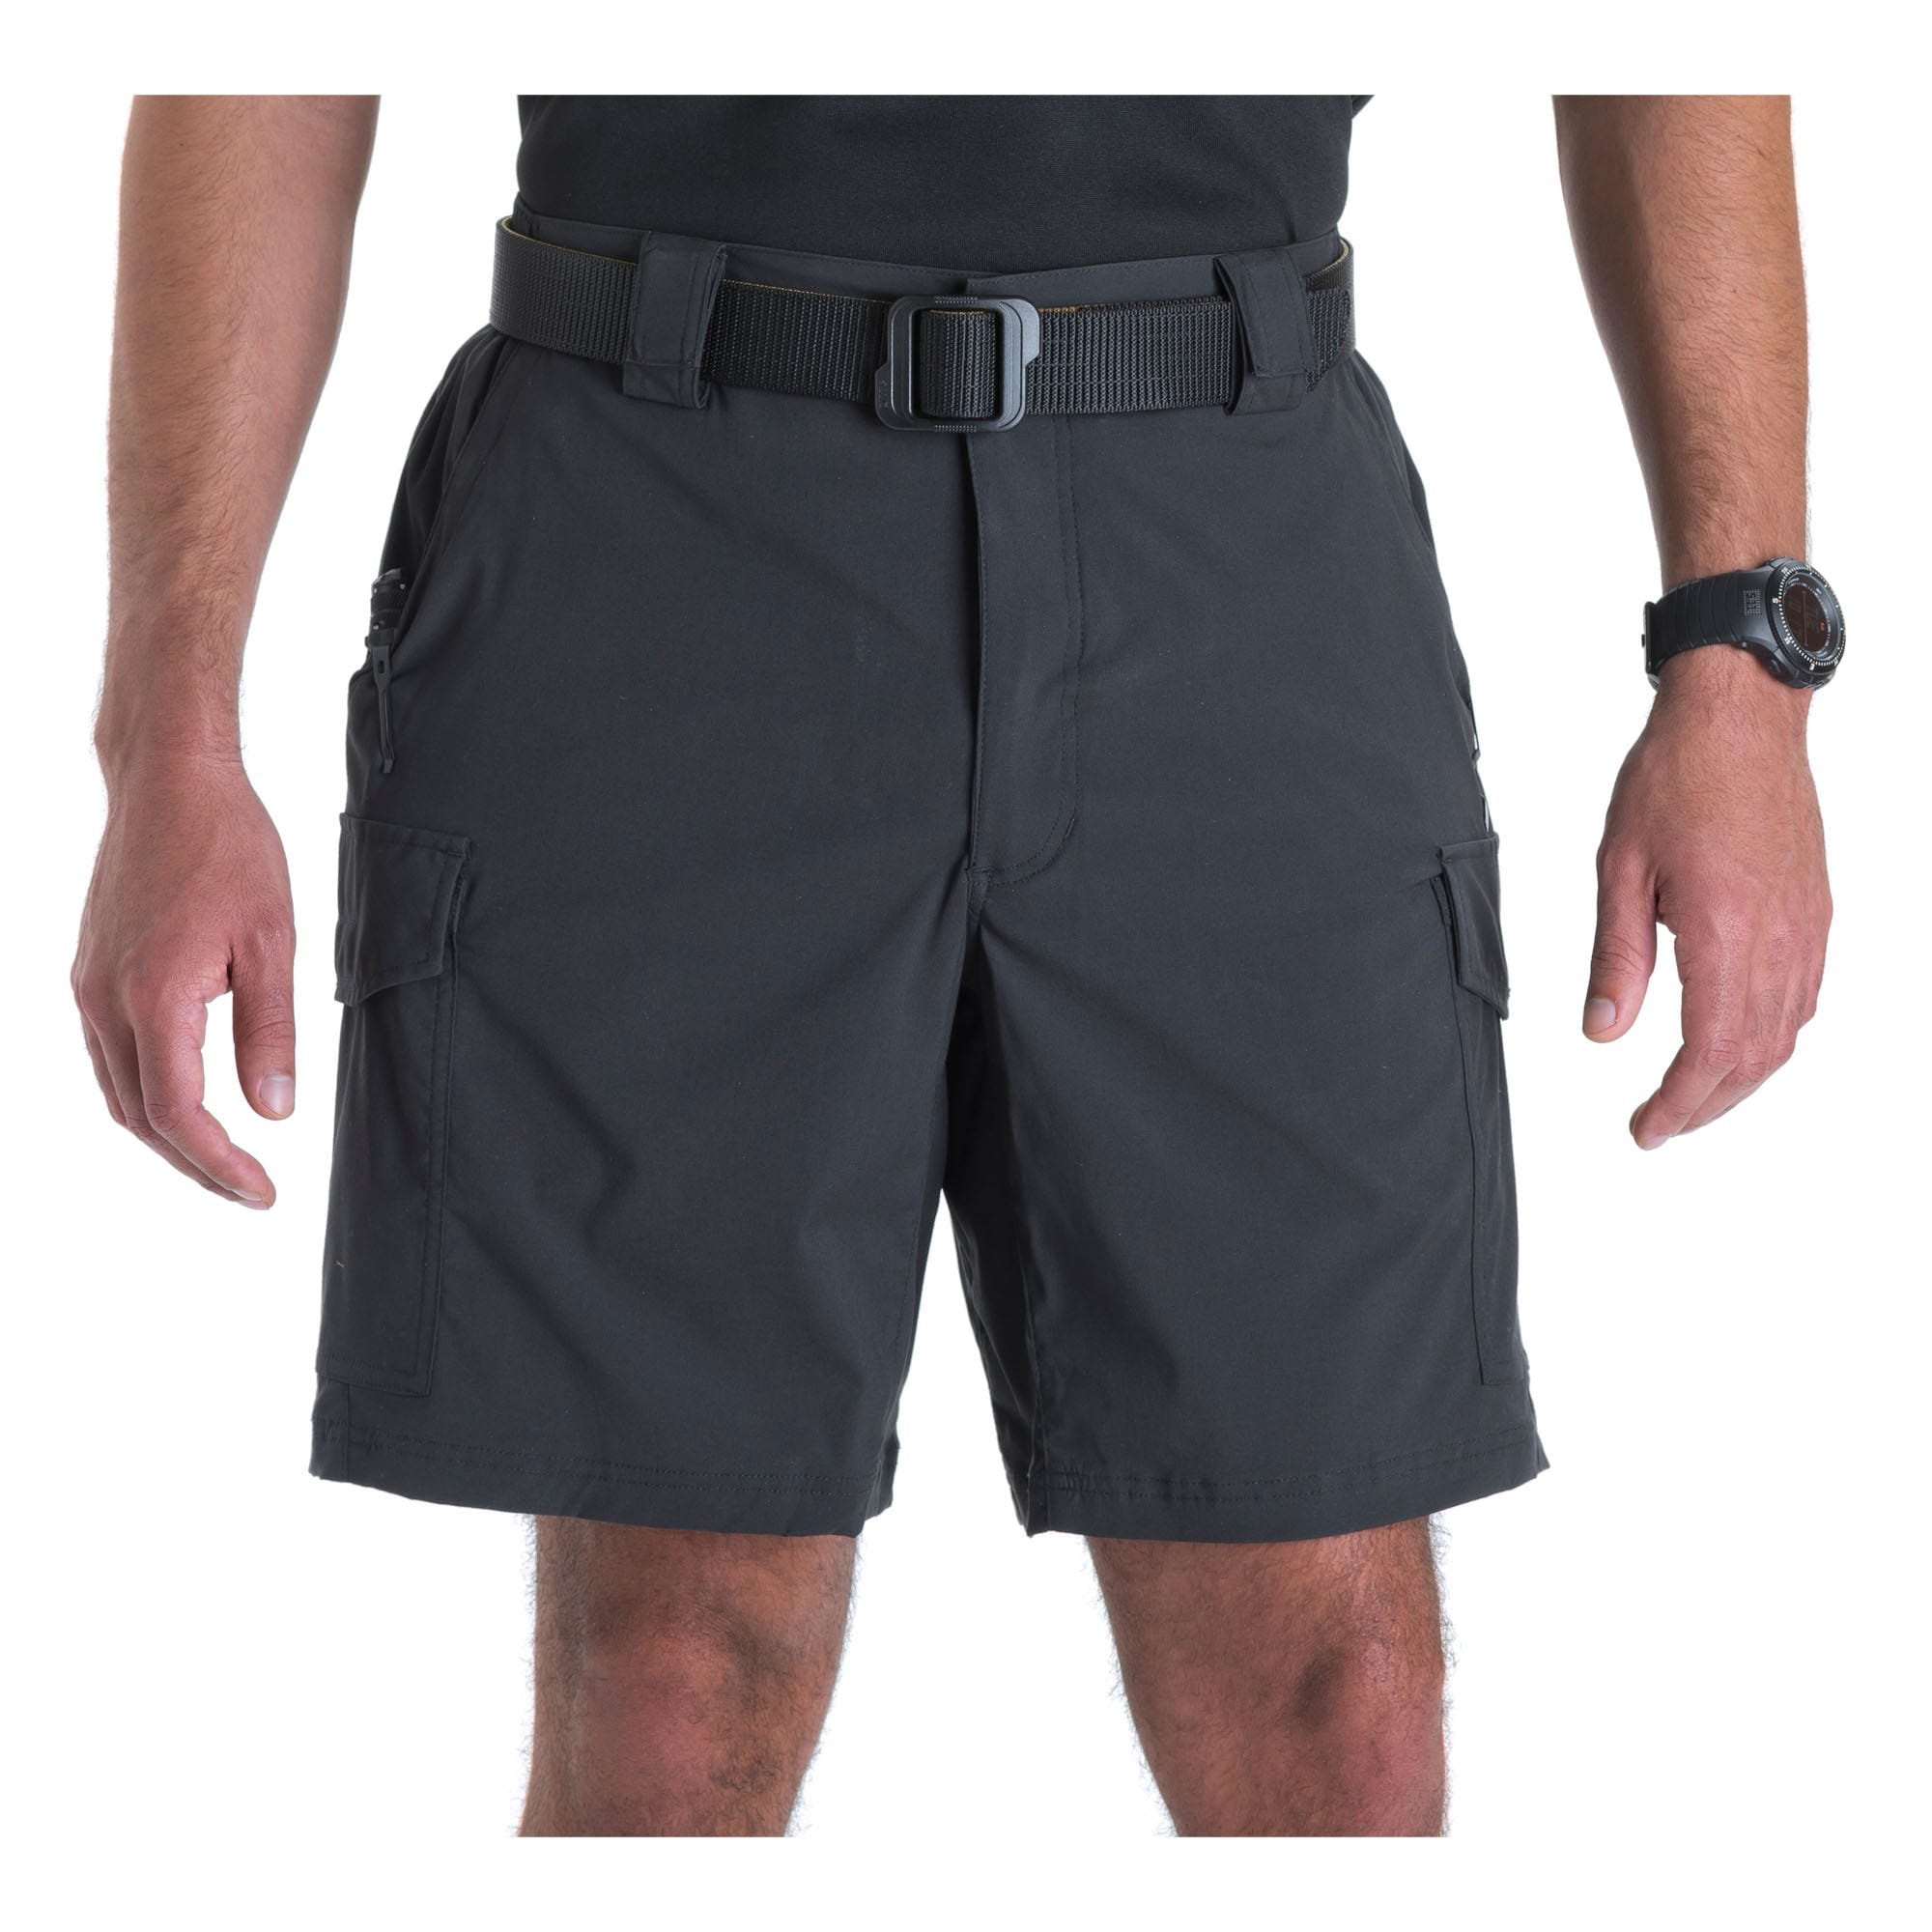 5.11 Work Gear Men's 9-Inch Inseam Bike Shorts, Nylon Spandex Fabric ...